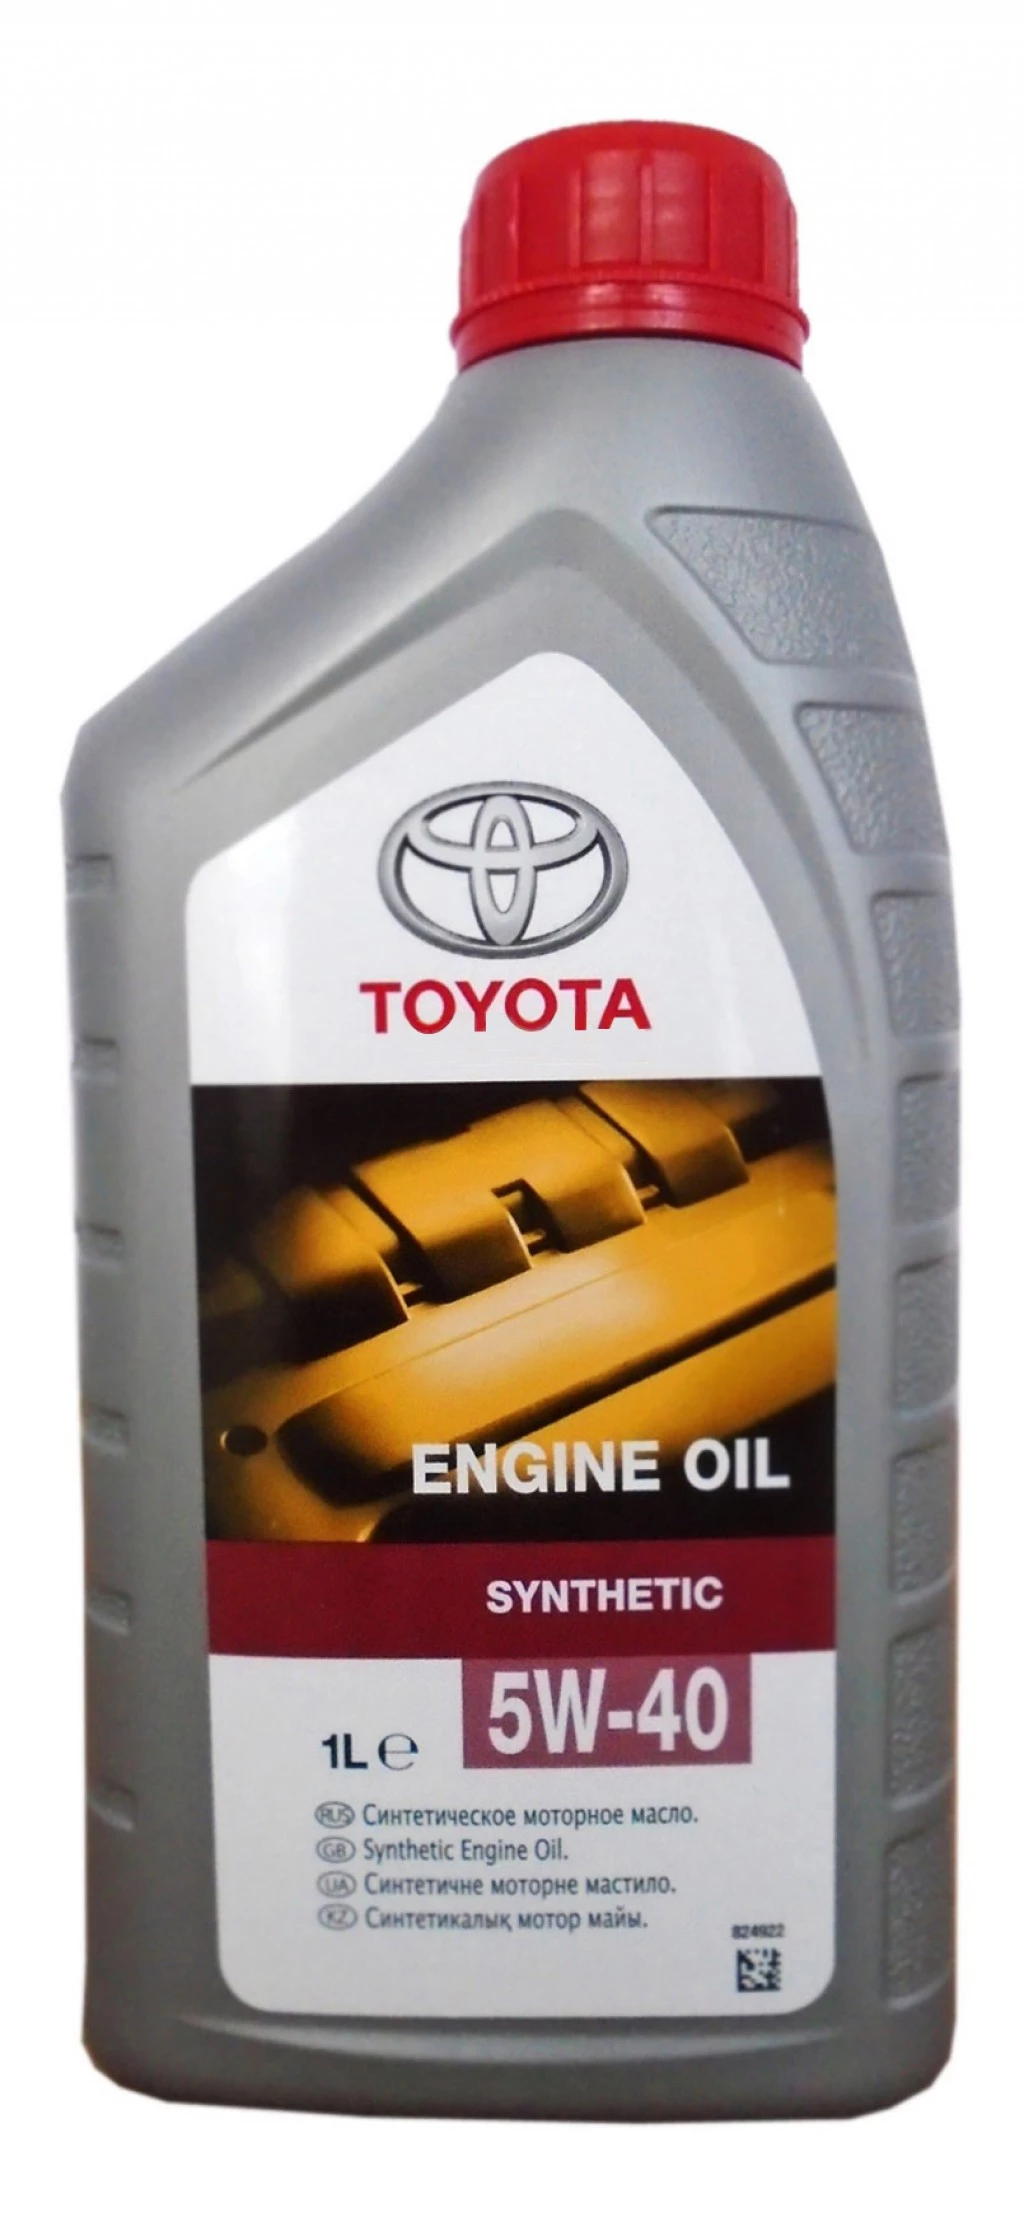 Моторное масло Toyota Engine Oil 5W-40 синтетическое 1 л.